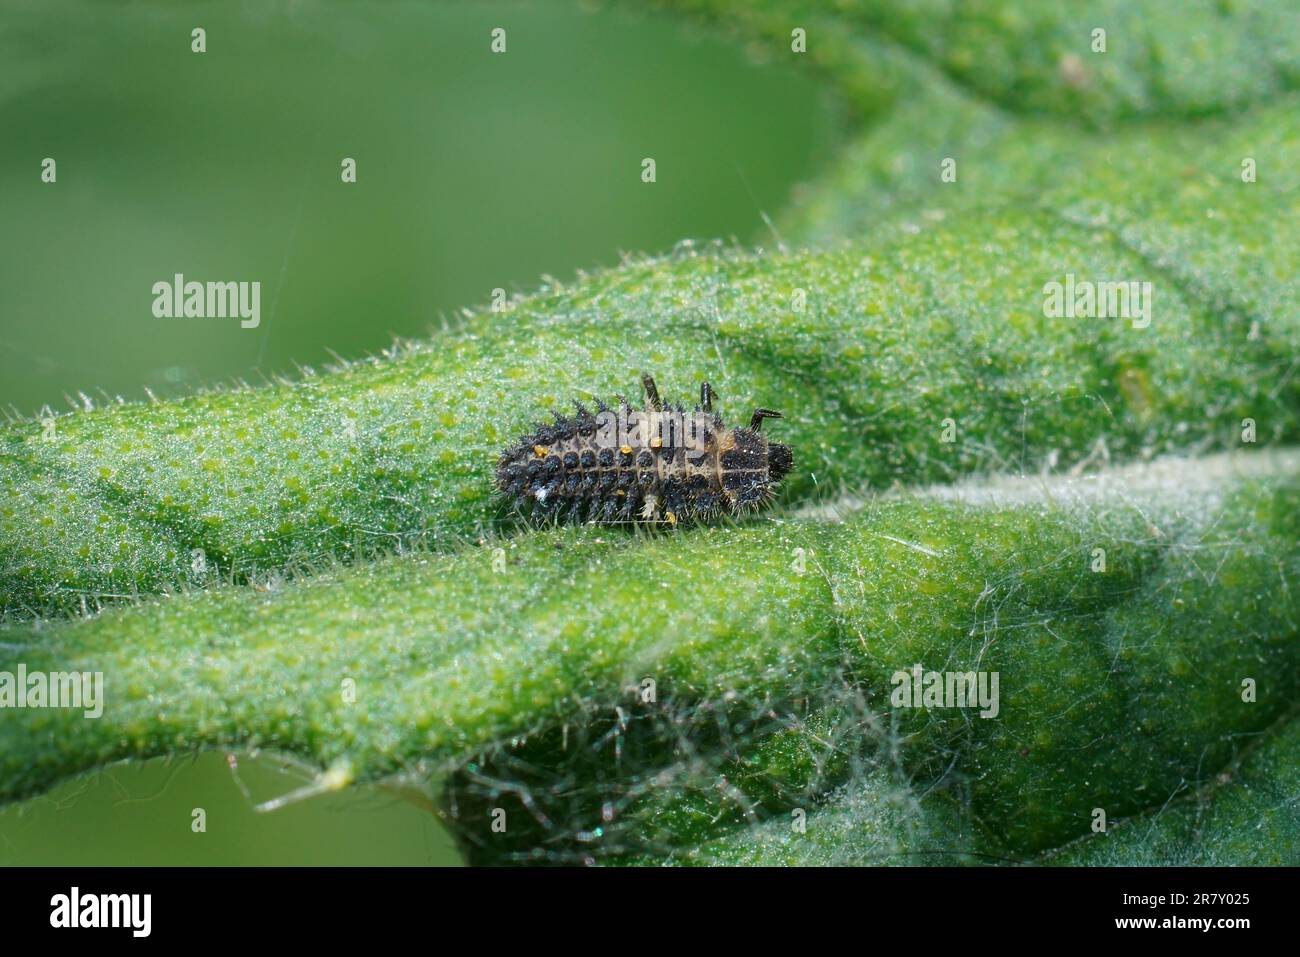 Closeup on a voracious larvae of the pine laydybird beetle, Exochomus quadripustulatus used for pest-control Stock Photo